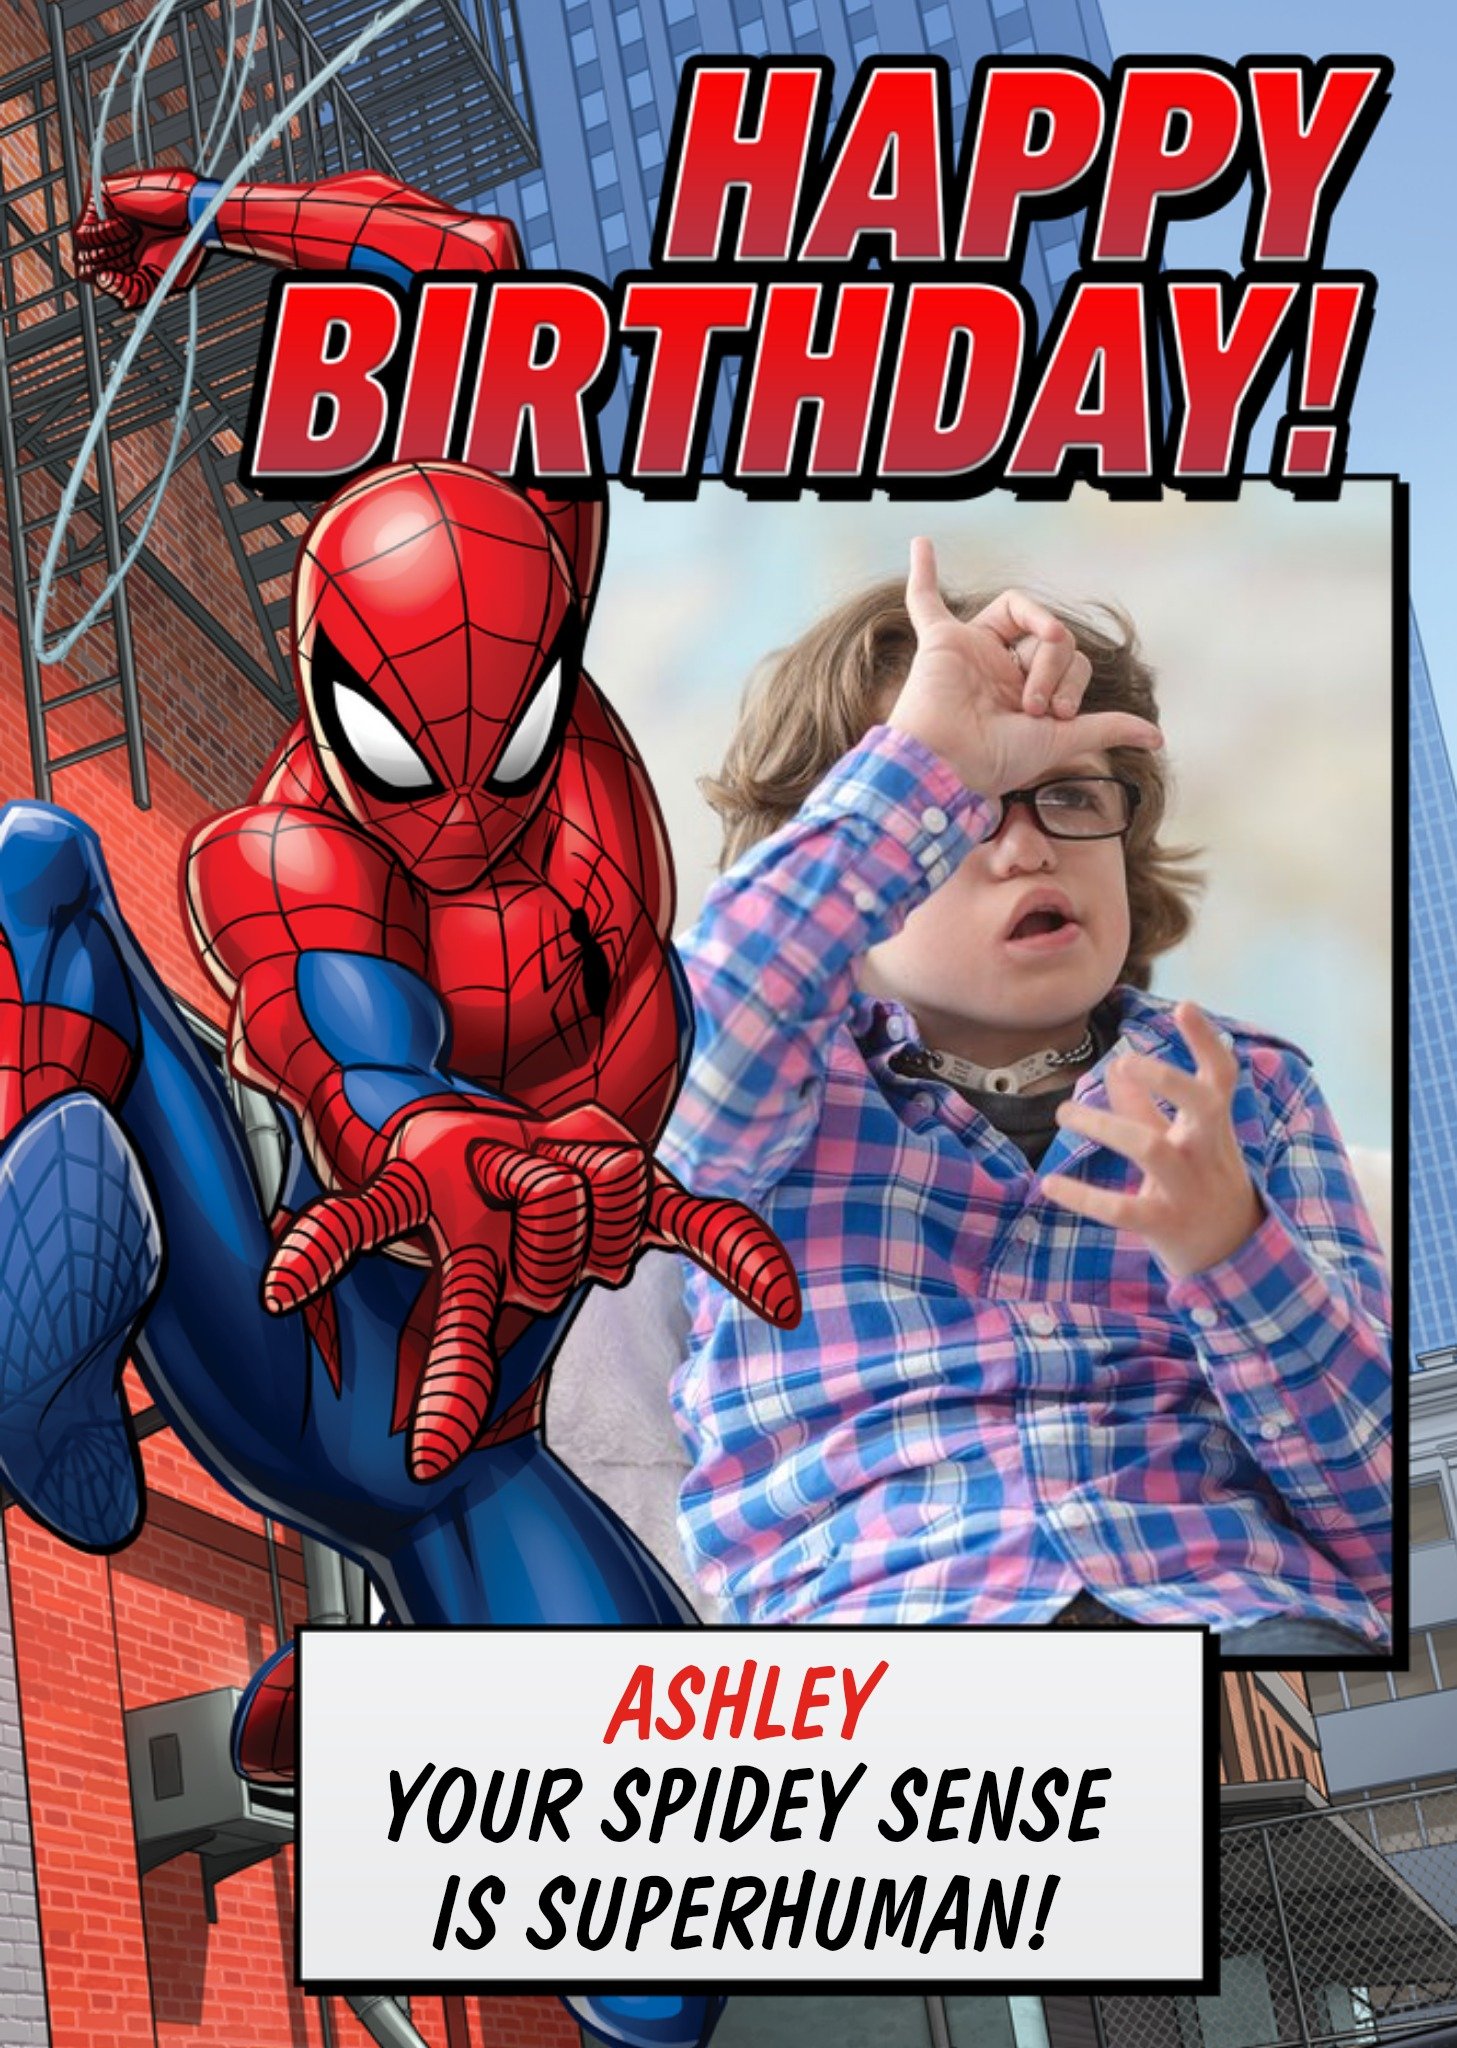 Marvel Avengers Spiderman Spidey Sense Photo Upload Birthday Card, Large